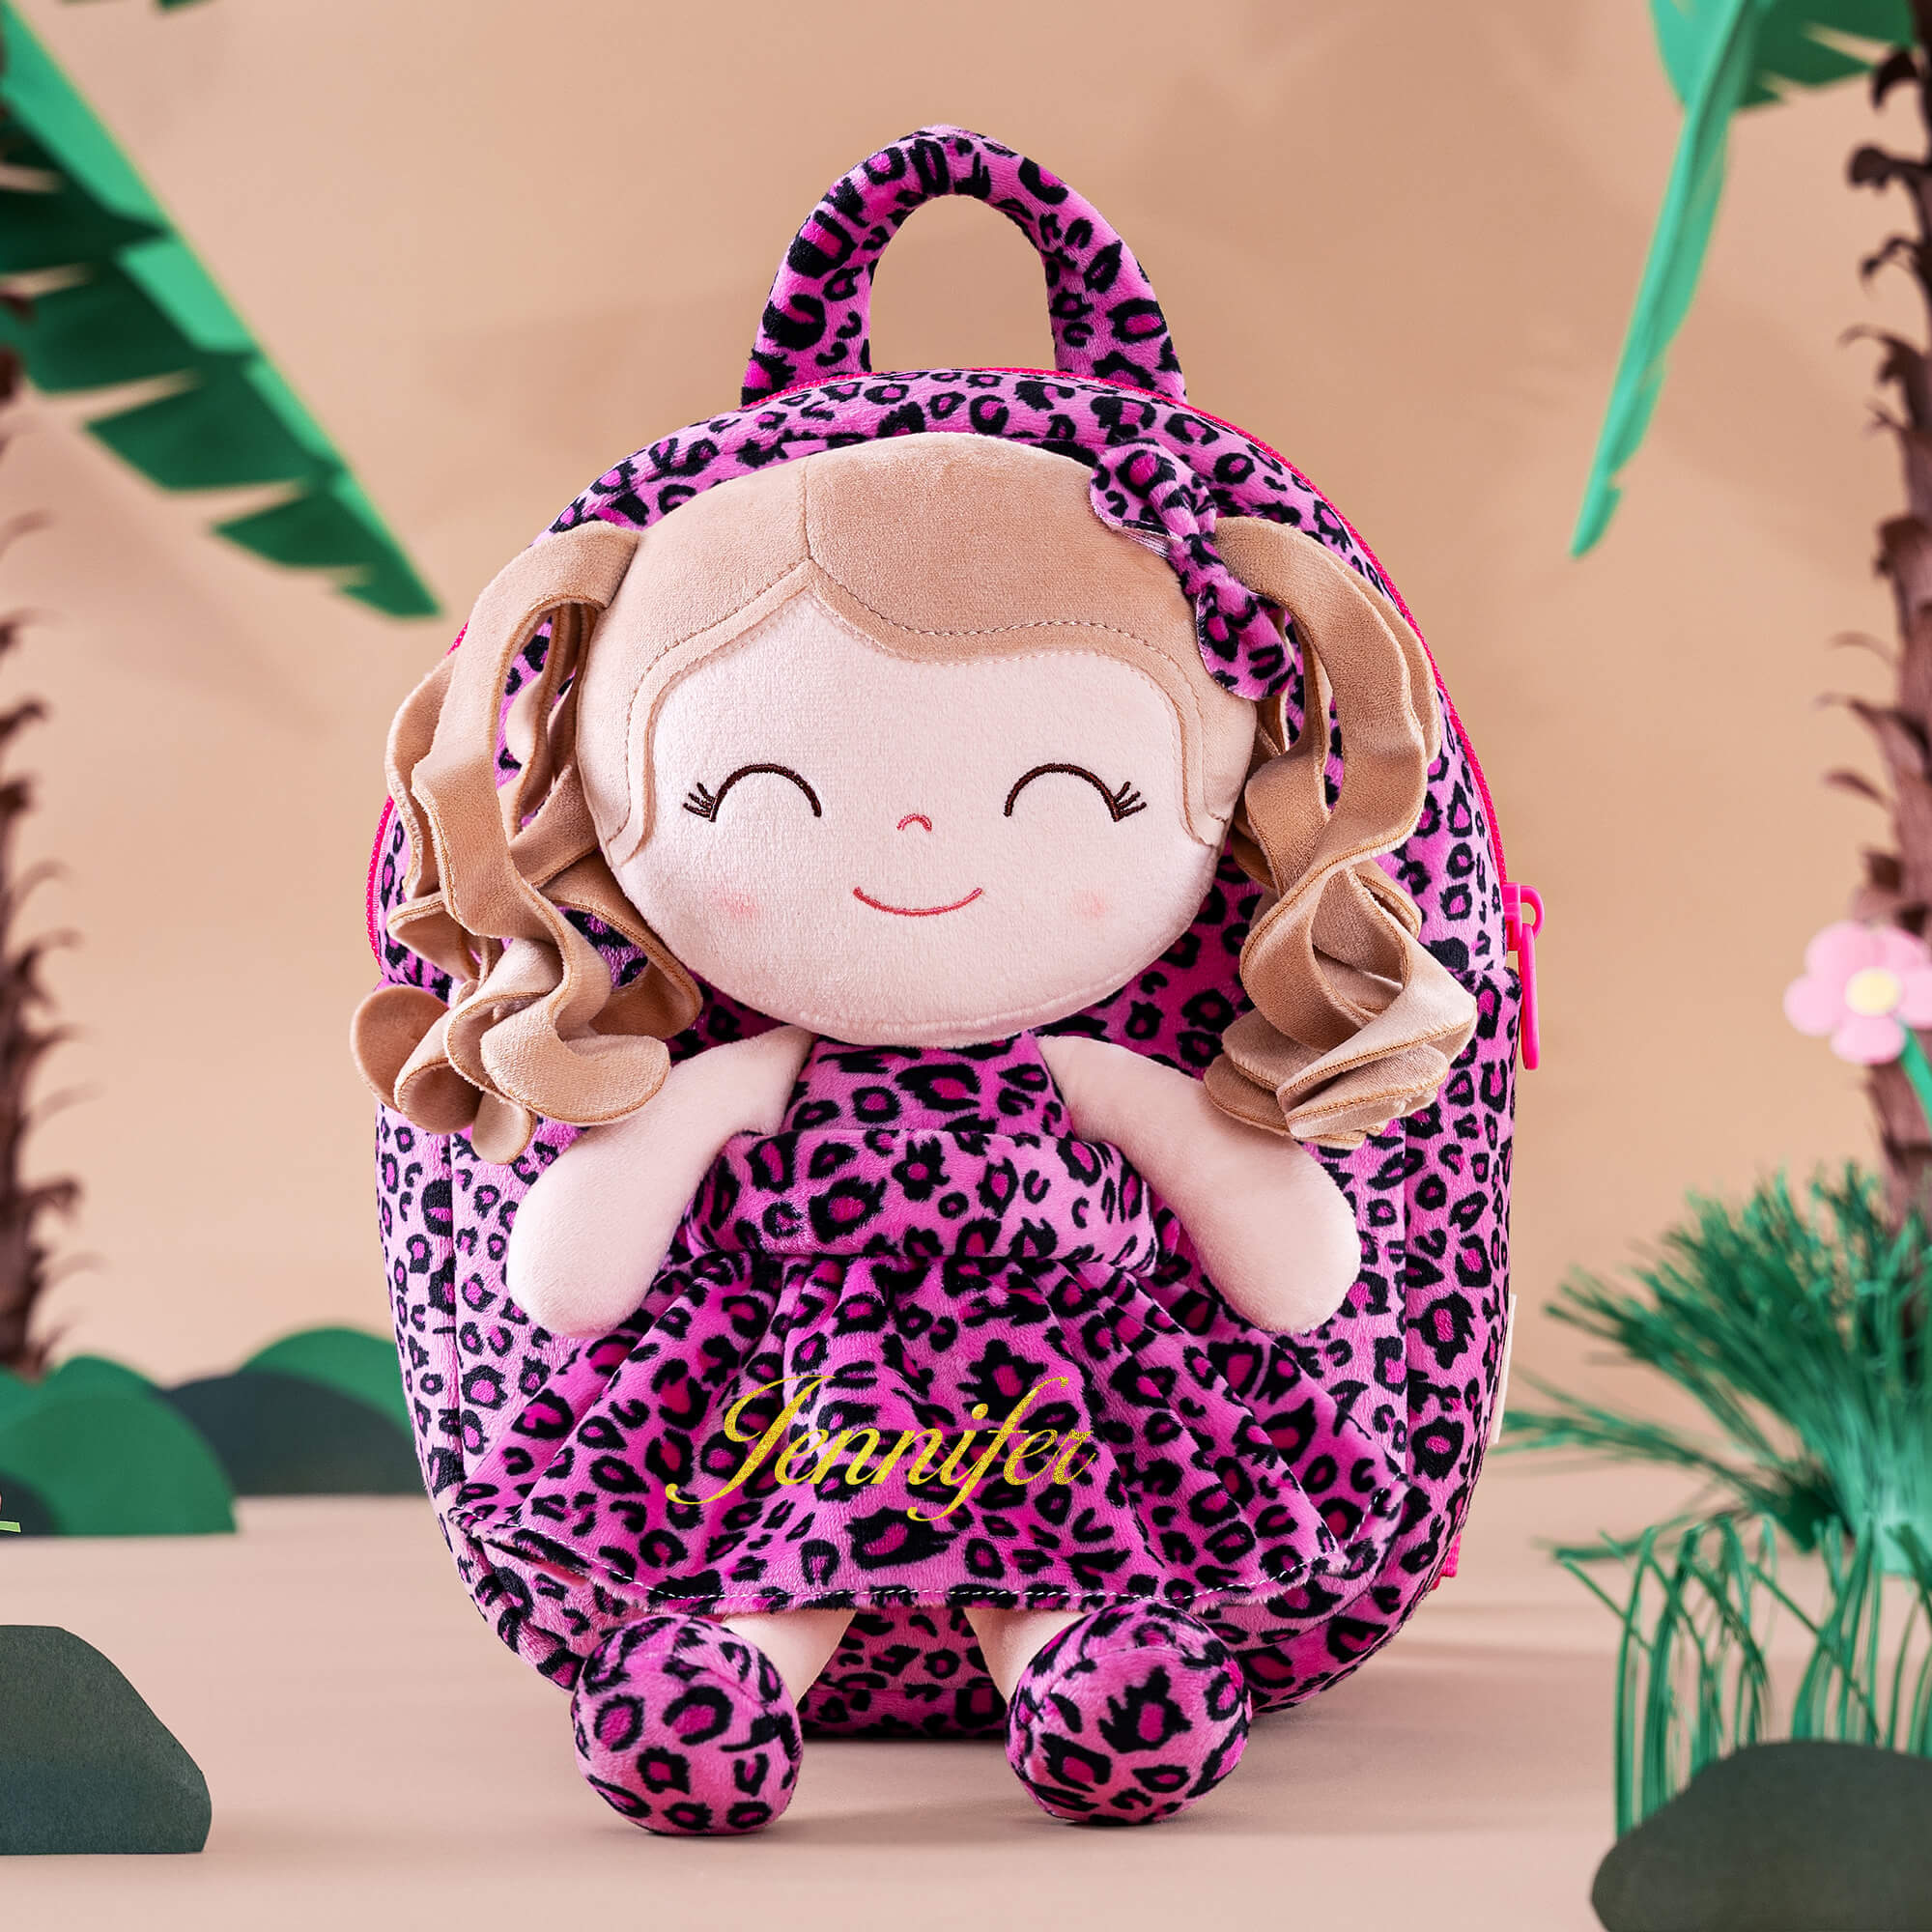 Gloveleya 9-inch Personalized Plush Curly Animal Leopard Dolls Backpack Rose Costume